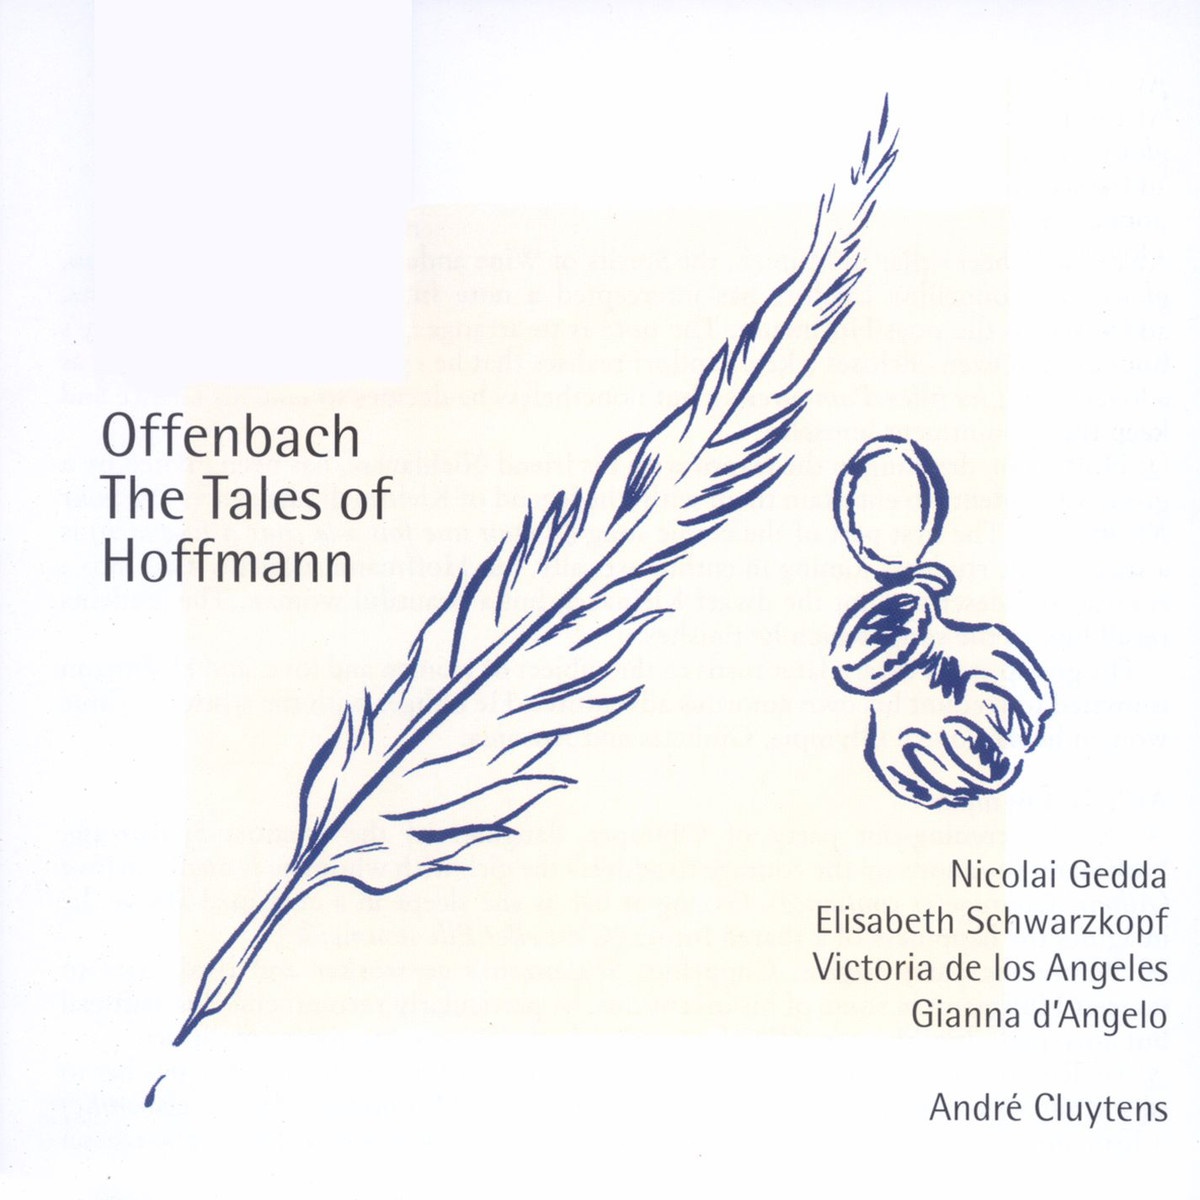 Les Contes d'Hoffmann - Highlights (1989 Digital Remaster), Act I: Introduction / Glou, glou, glou (Chorus)